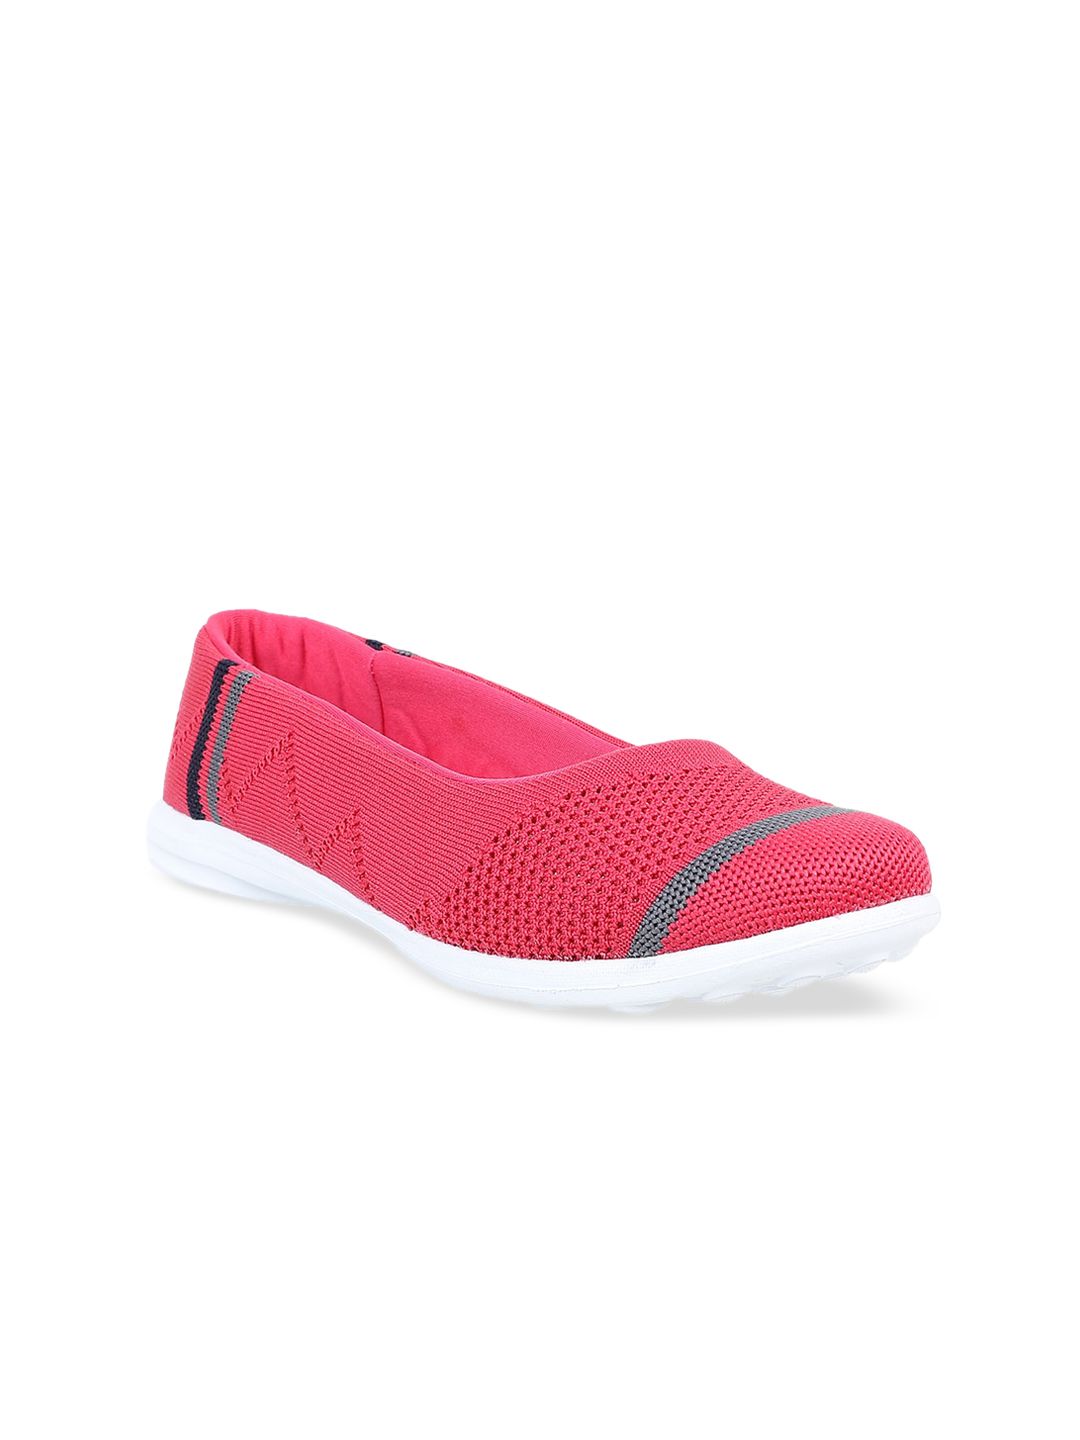 Yuuki Women Fuchsia Pink Walking Shoes Price in India